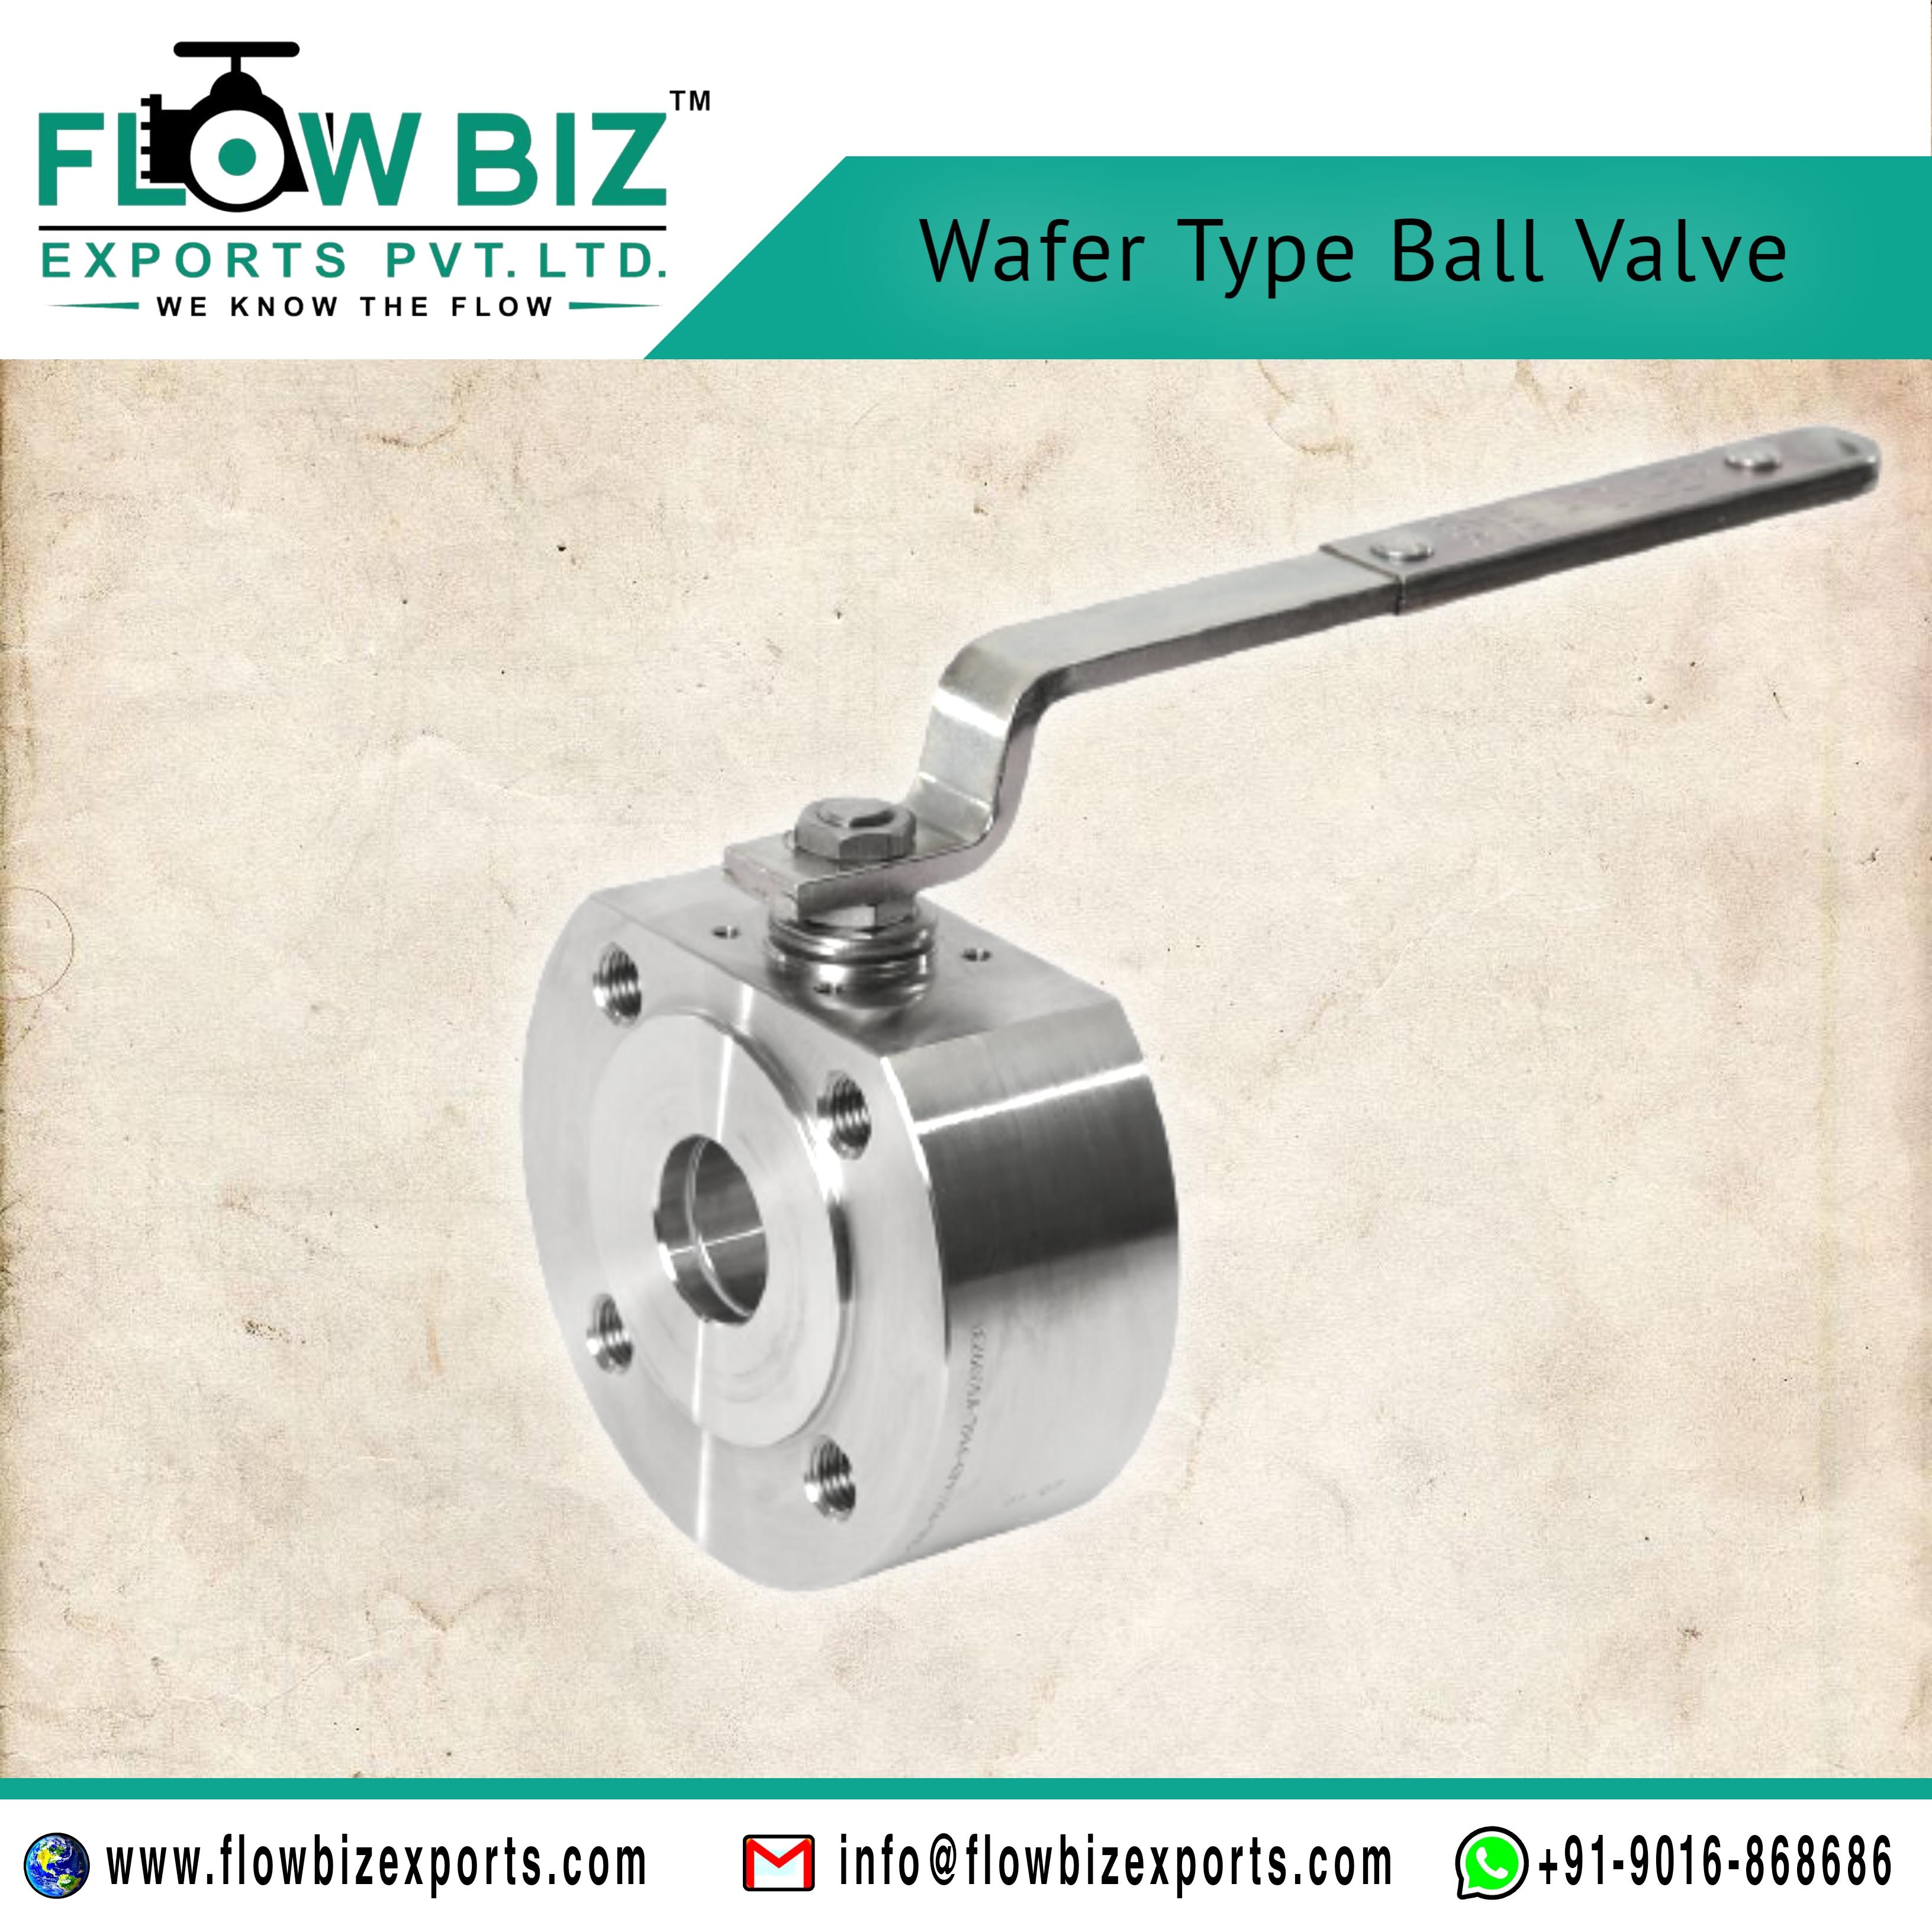 wafer type ball valve manufacturer india - Flowbiz